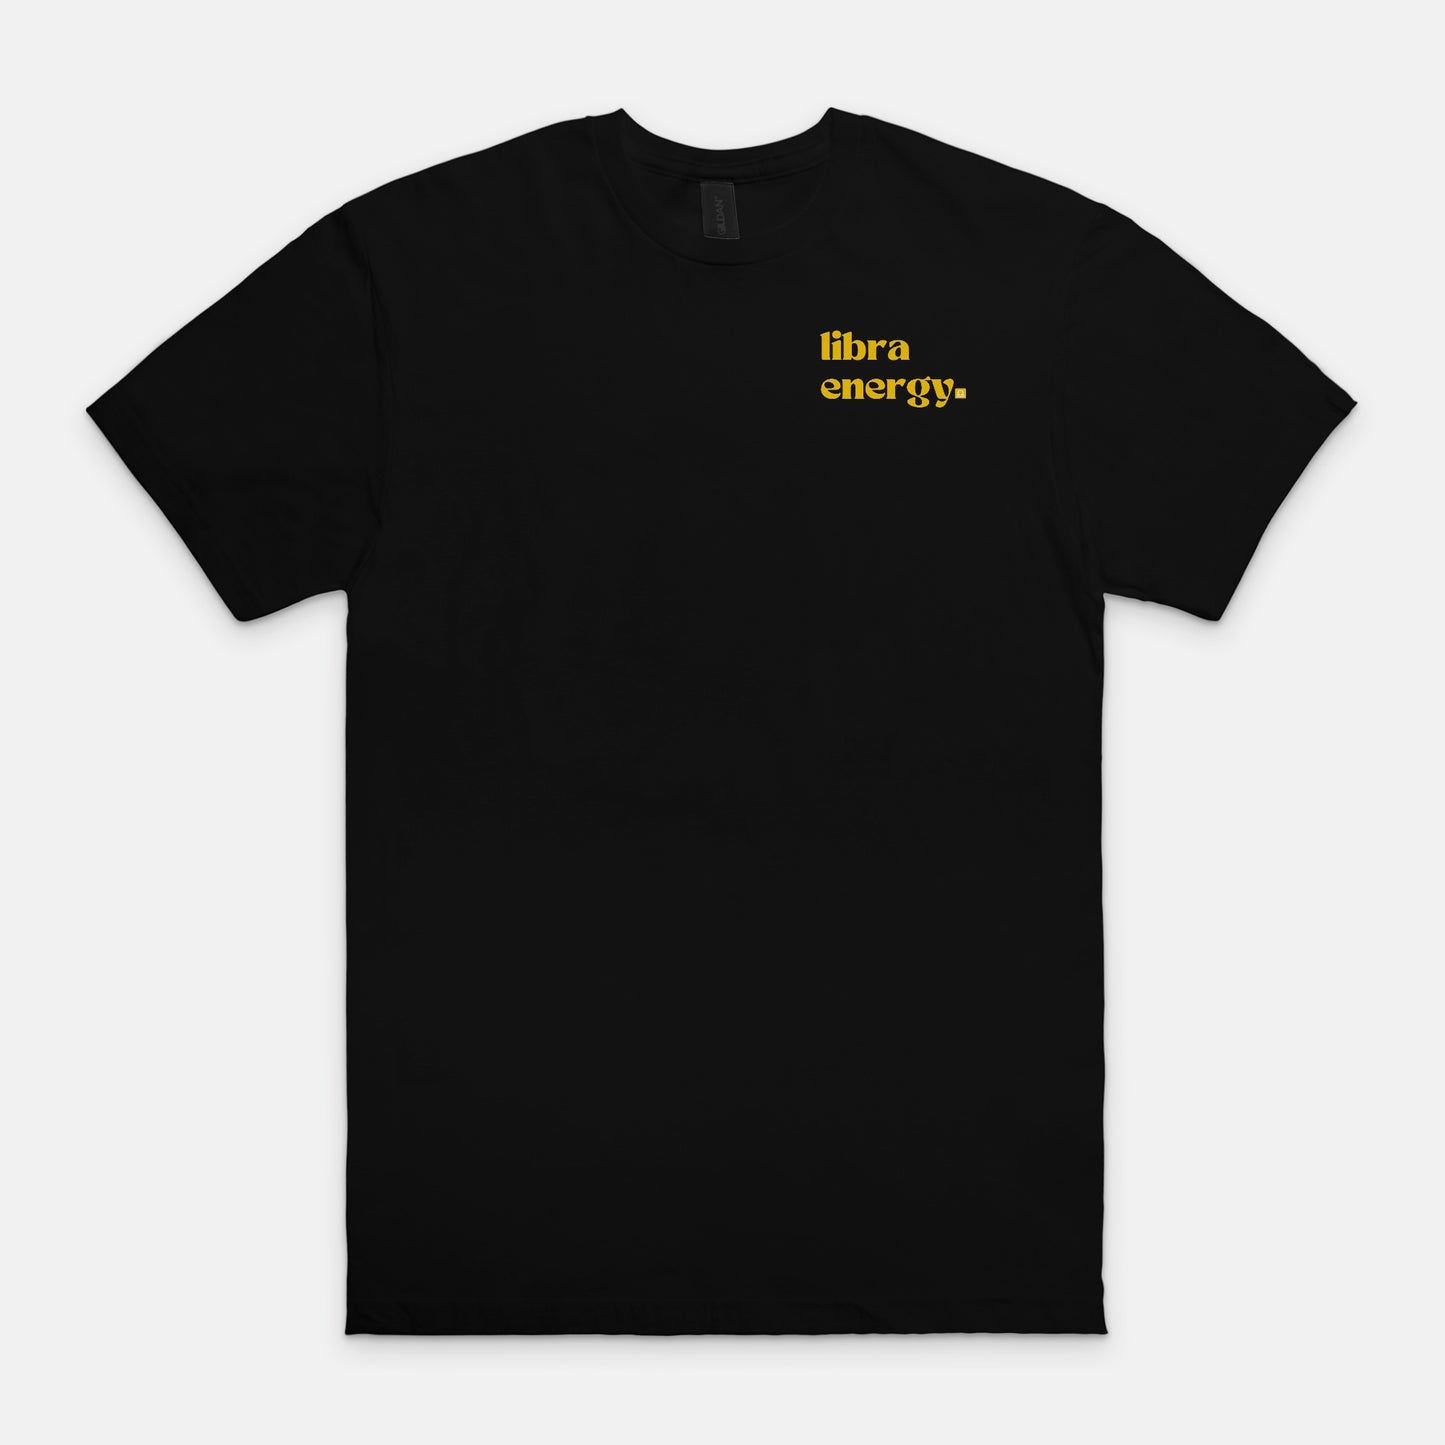 Libra Energy T-shirt